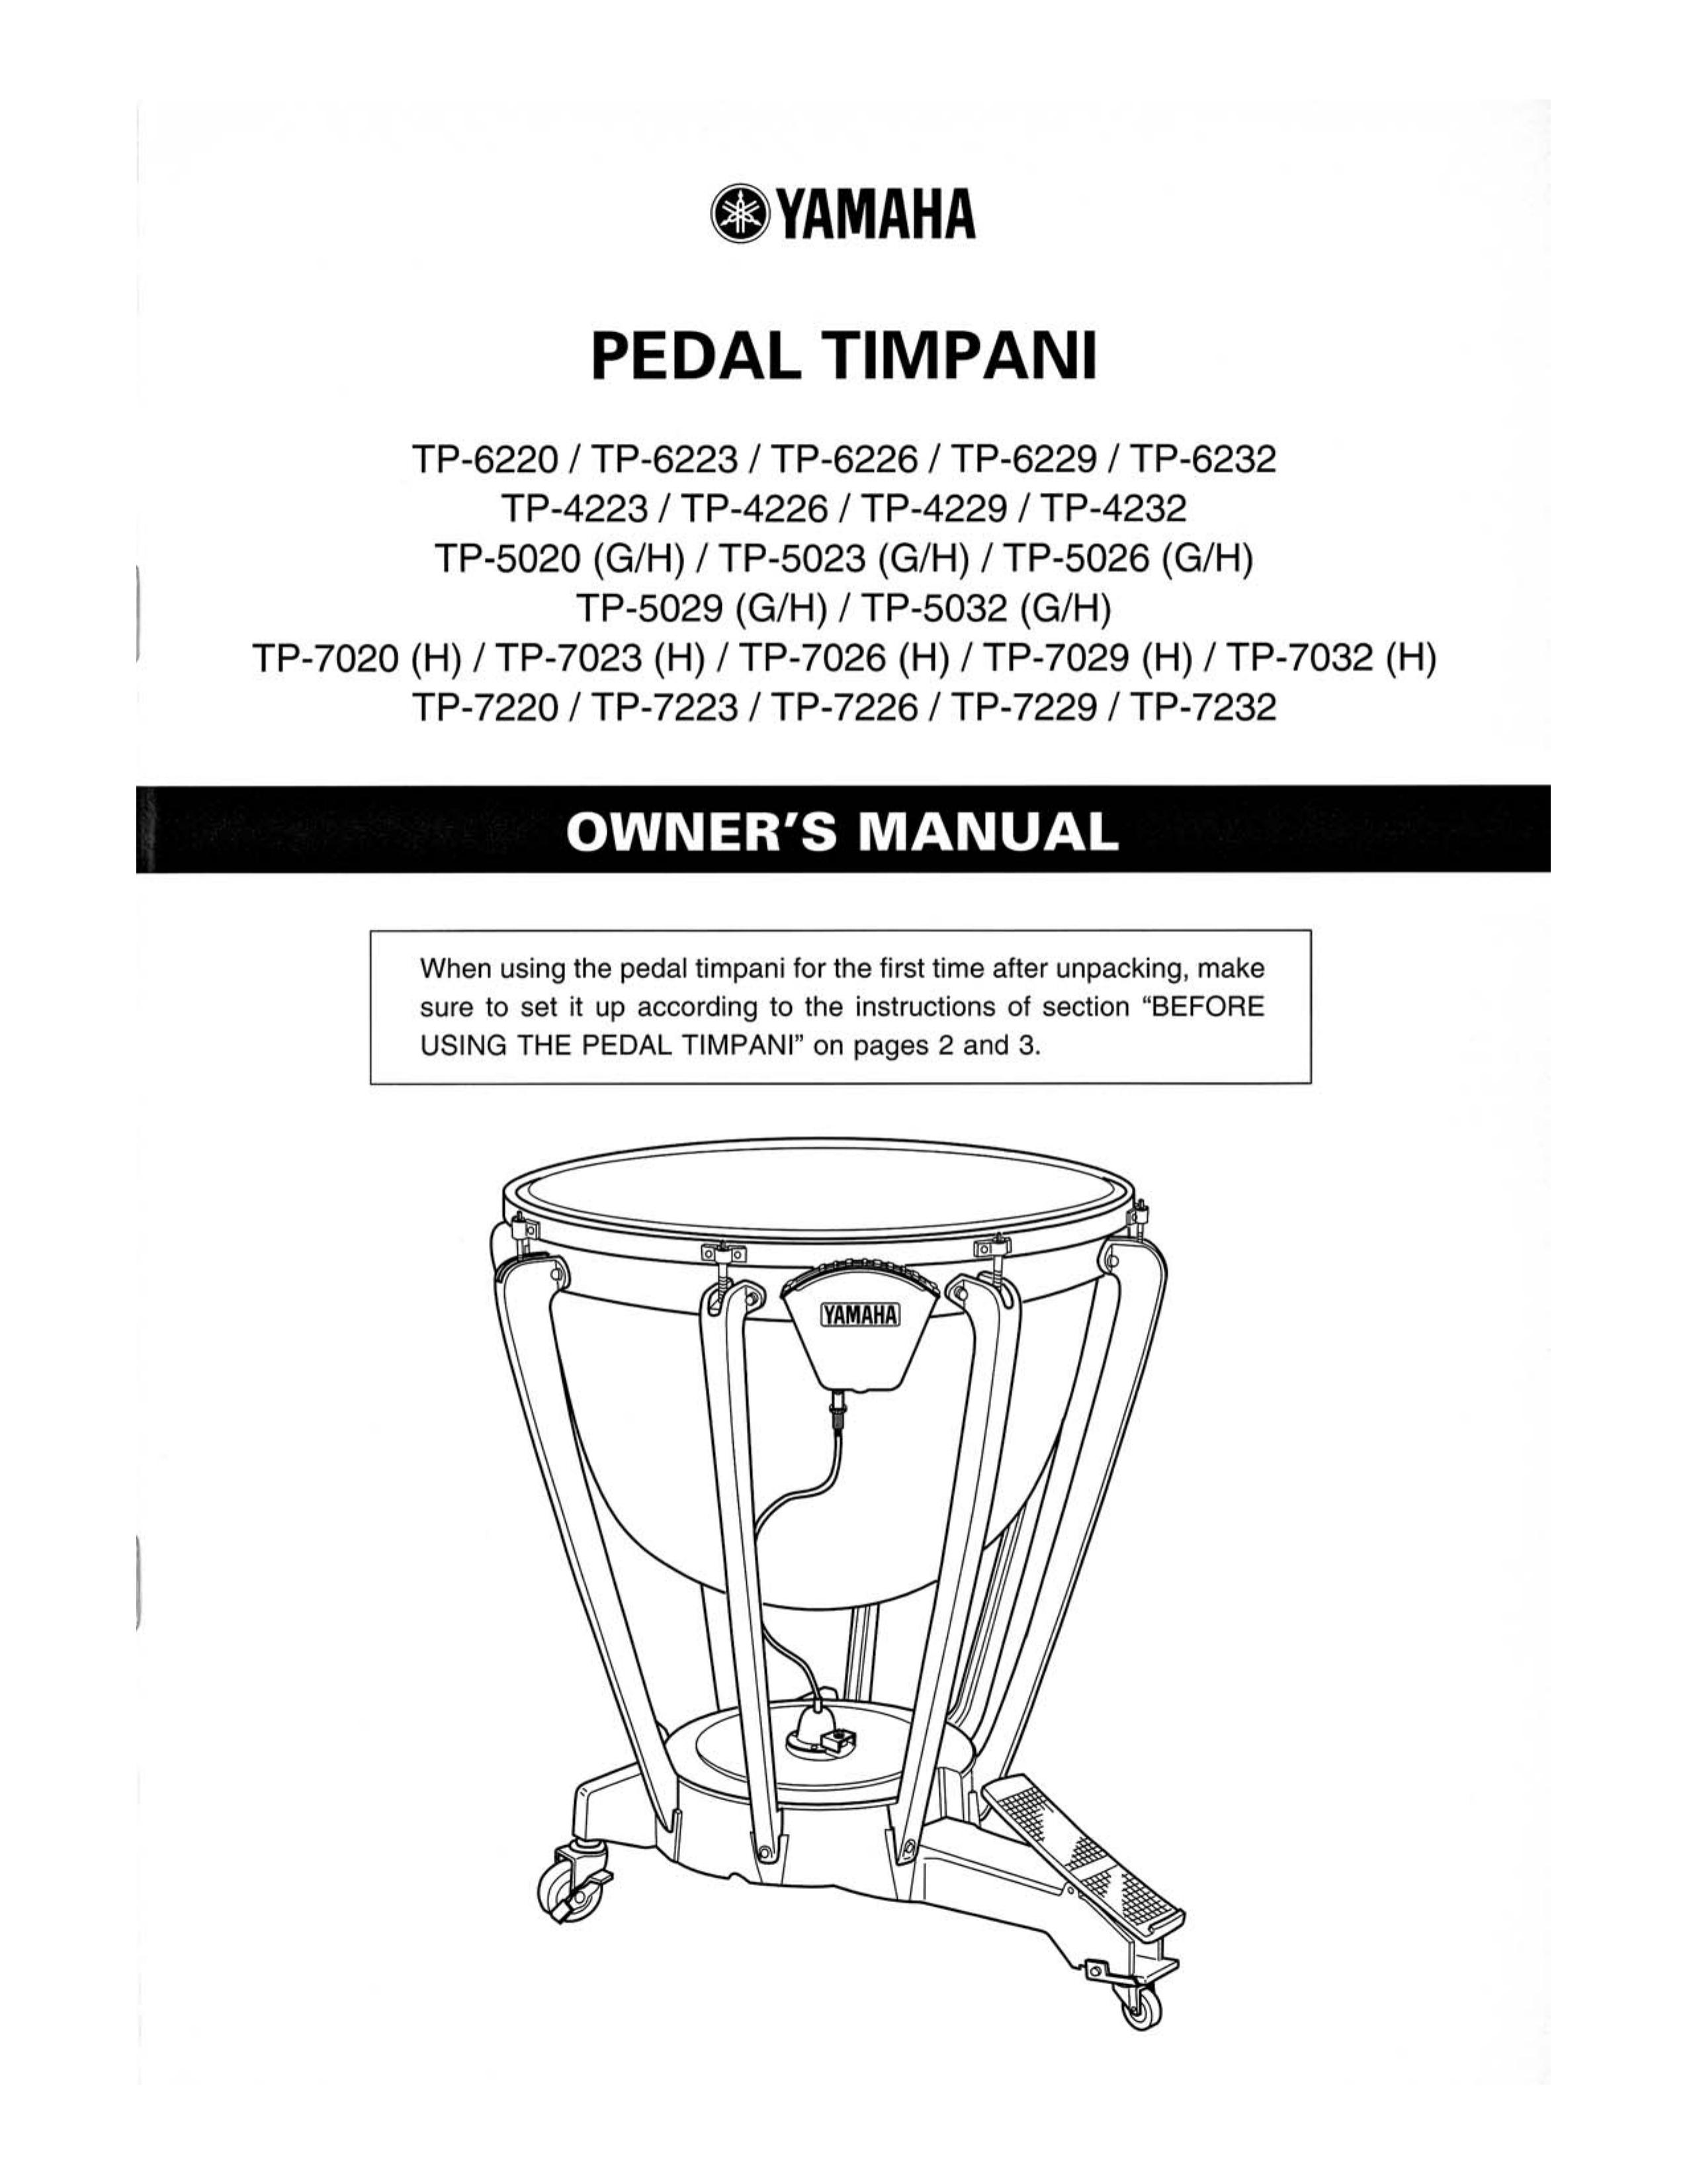 Yamaha TP-5026 Music Pedal User Manual